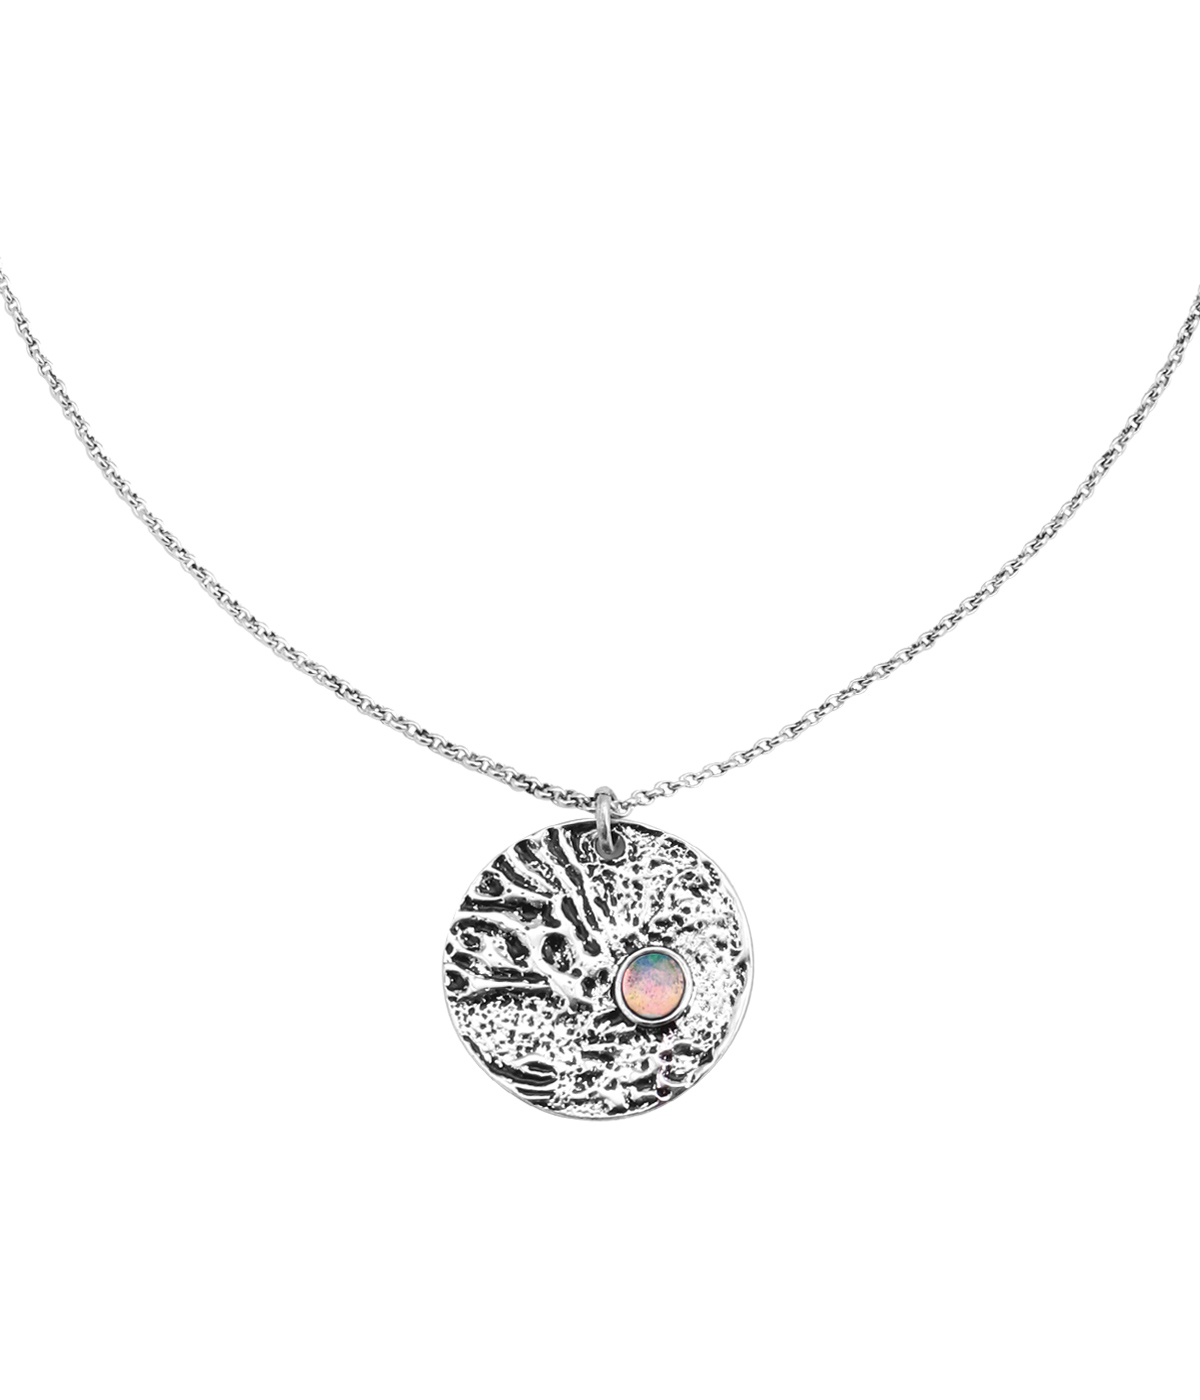 Hestness Anne Lise | Moon Opal necklace -latest NECKLACE,Pendant Necklaces design 2021